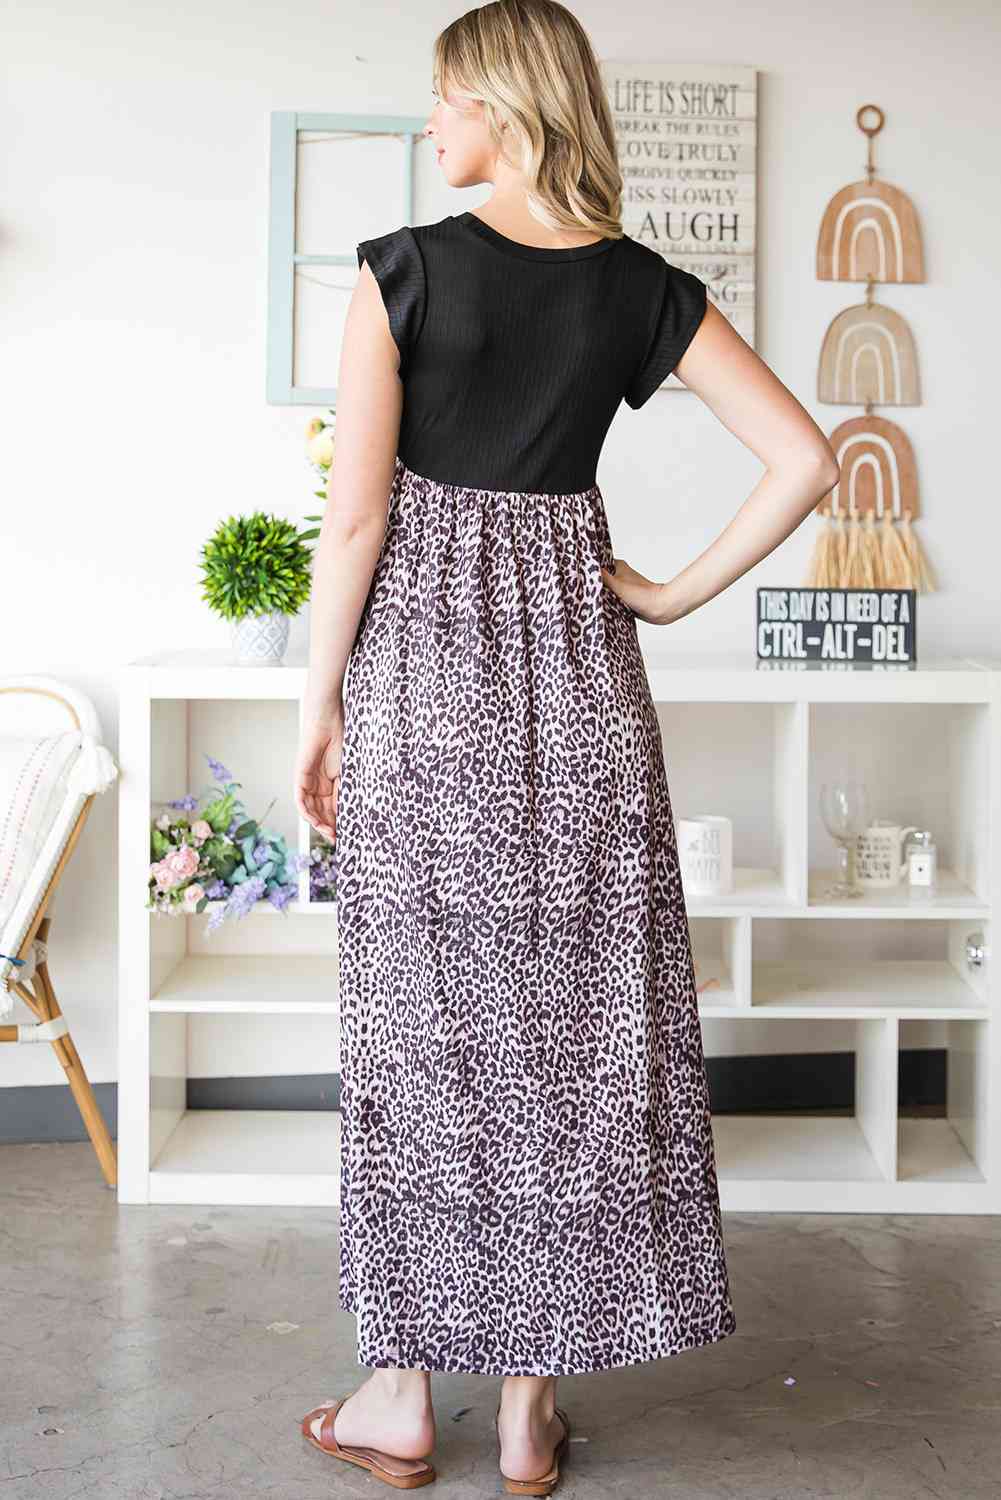 Leopard Print Round Neck Maxi Dress with Pockets  Krazy Heart Designs Boutique   